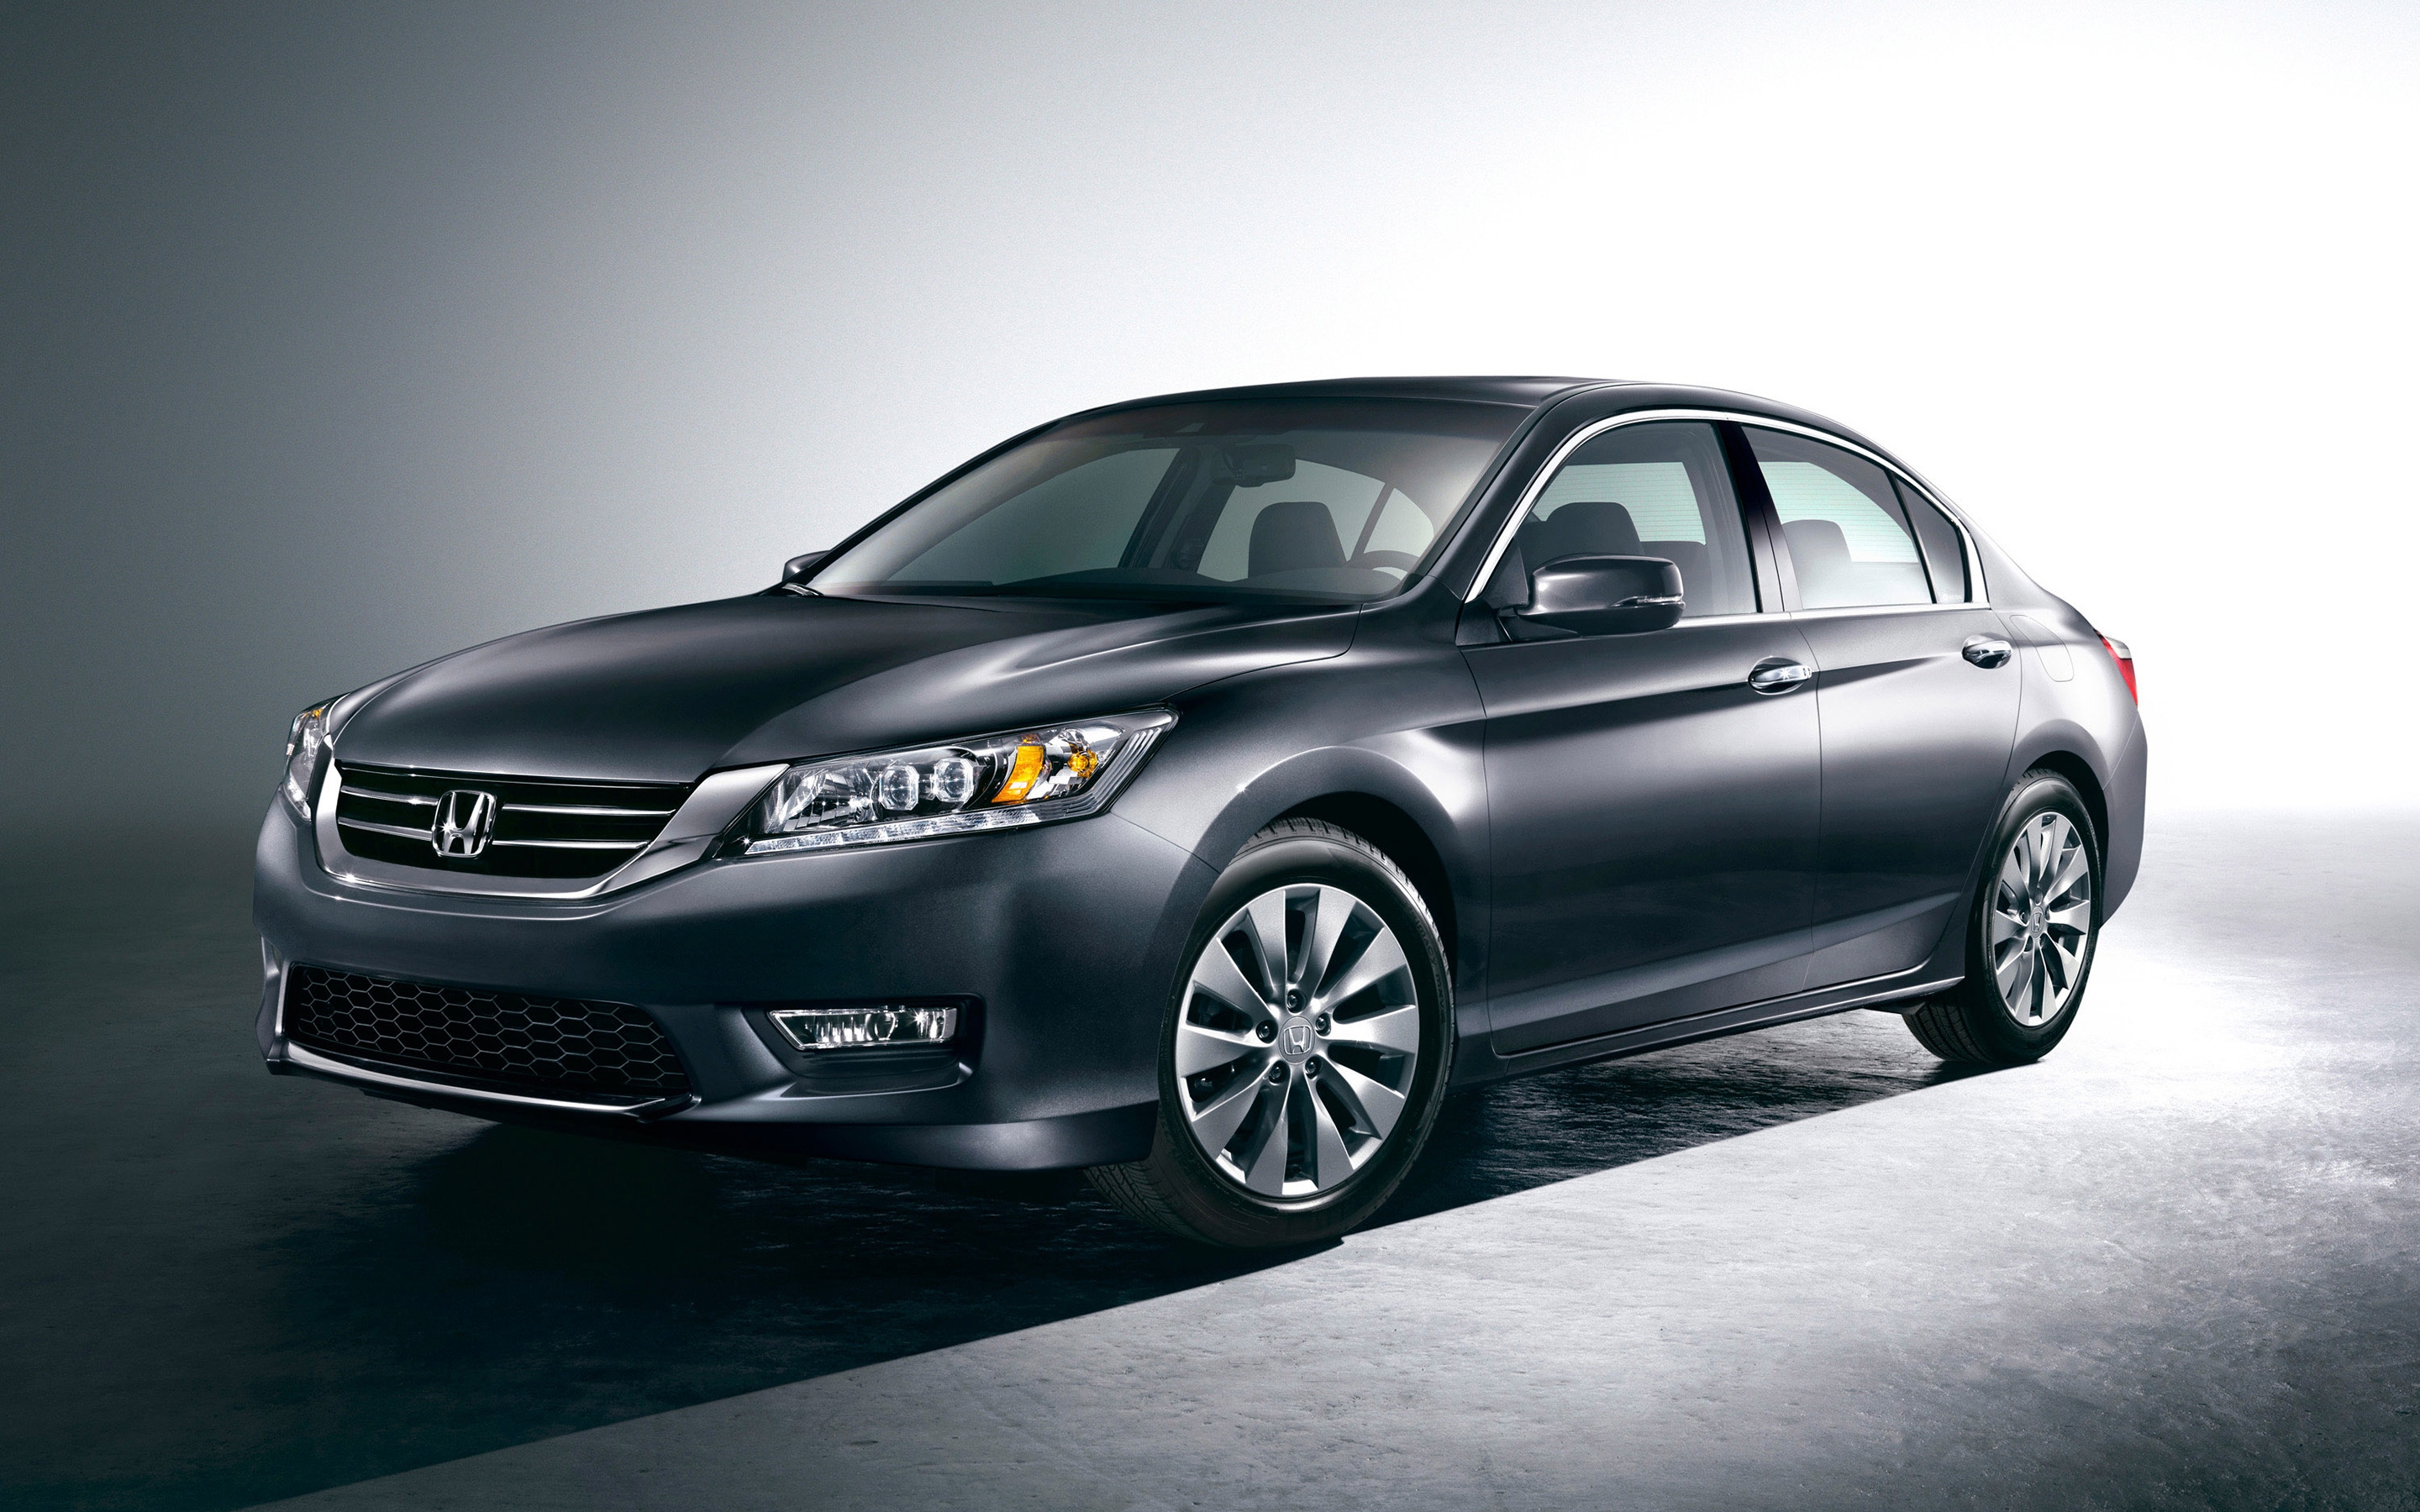 2013 Honda Accord for 2880 x 1800 Retina Display resolution